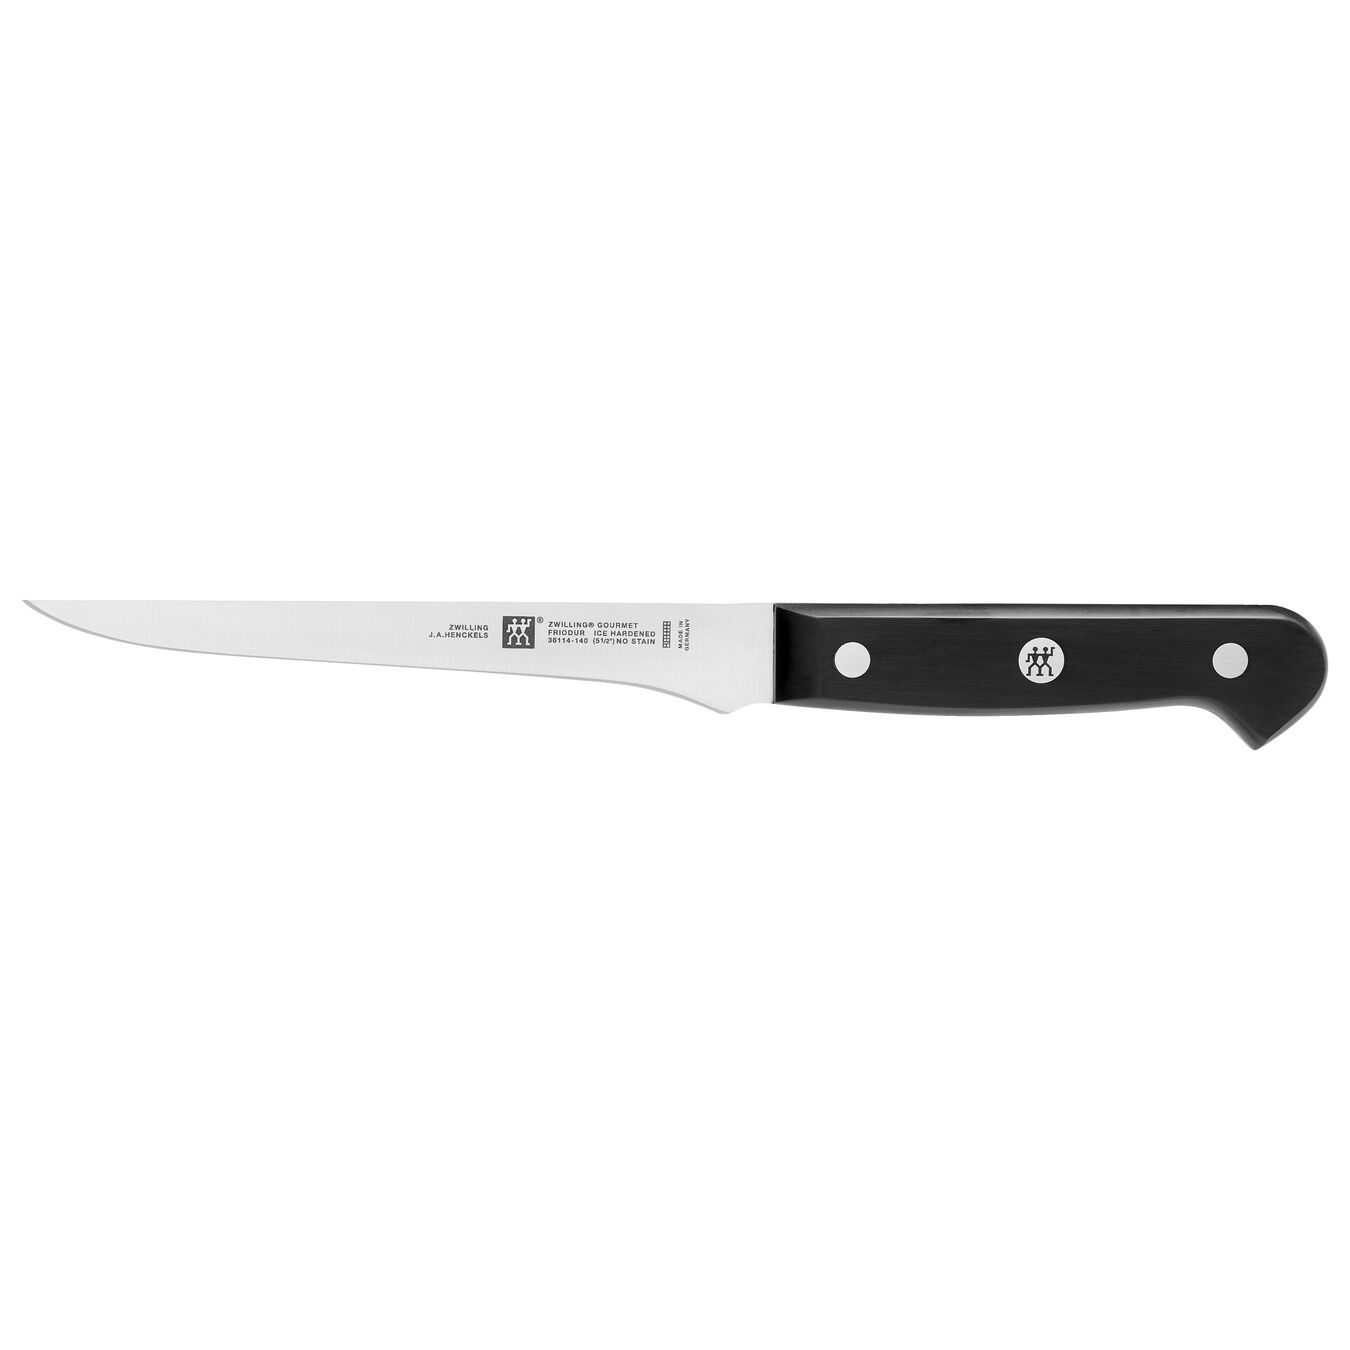 boning knife with riveted black handle on white back ground